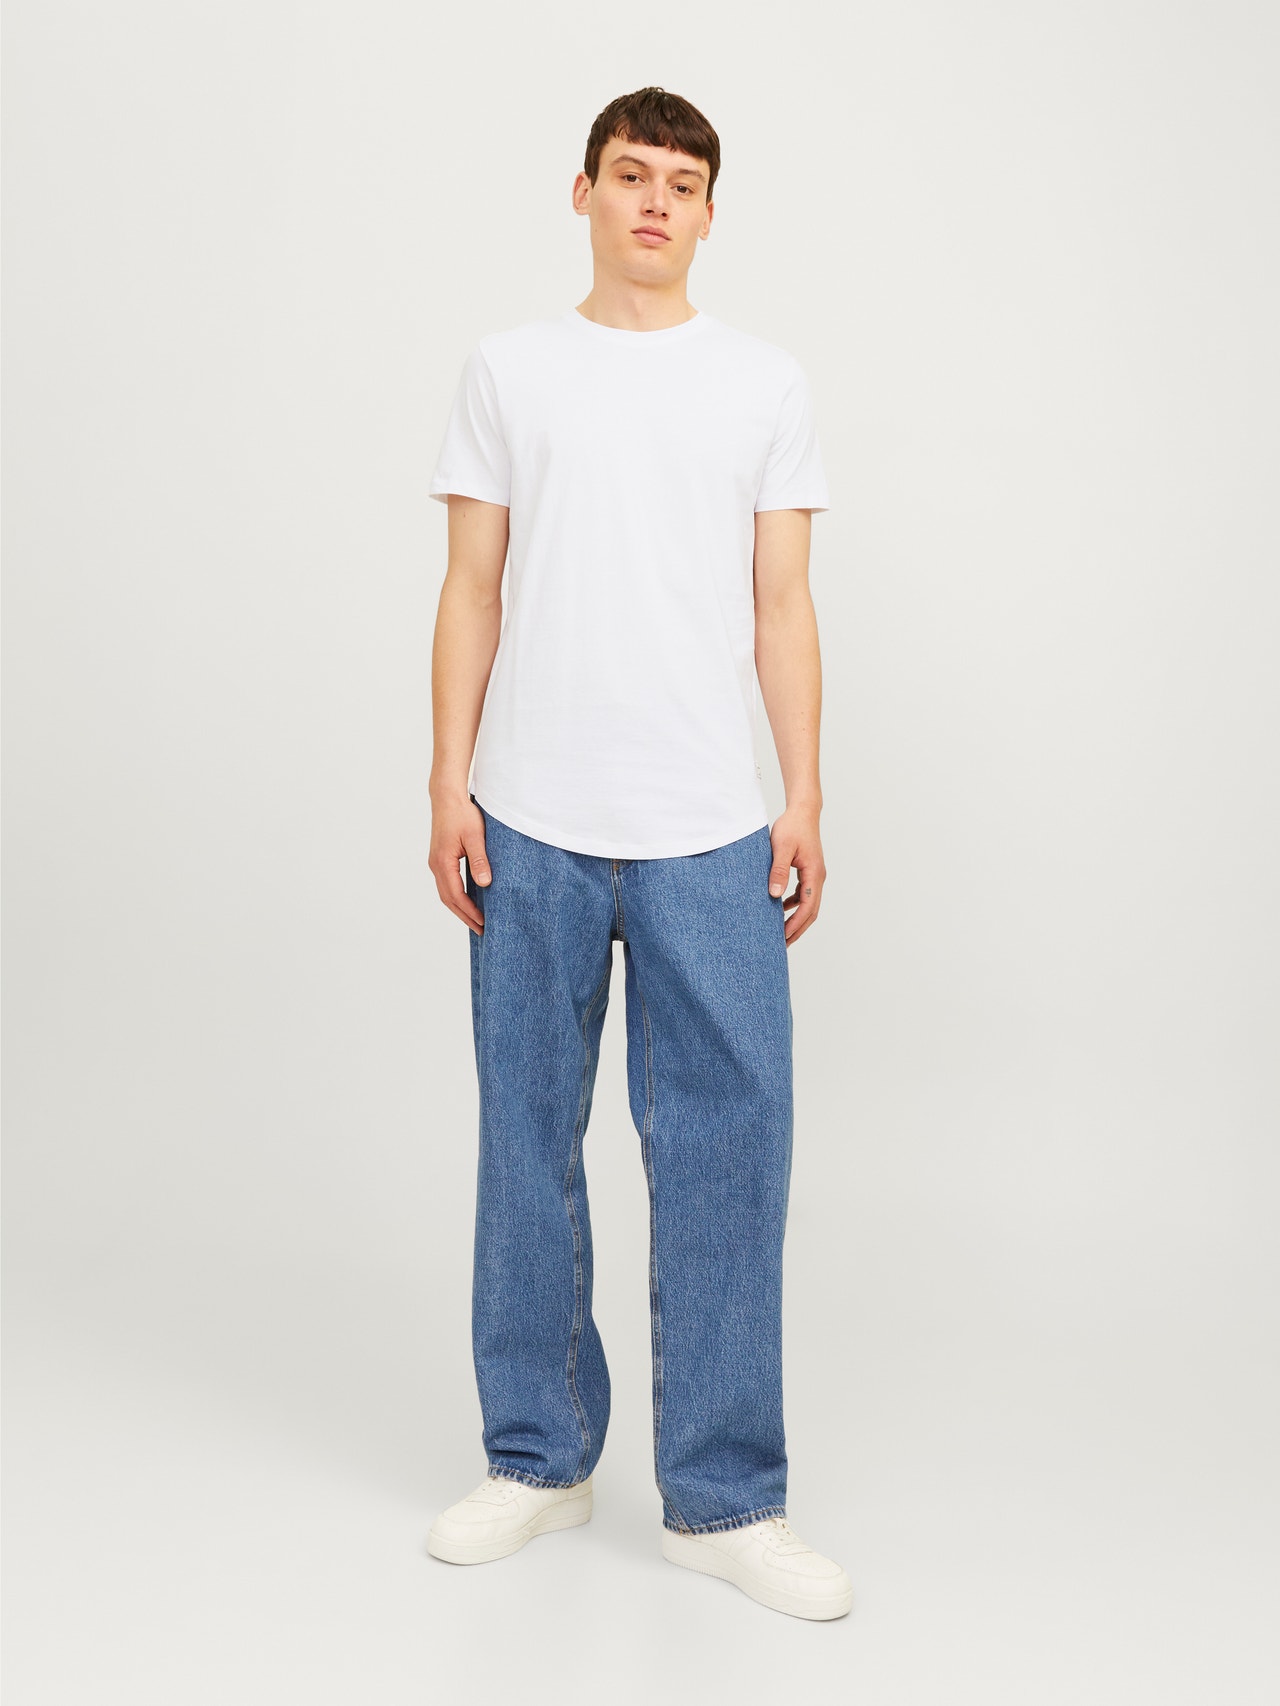 Jack & Jones 7-pack Enfärgat Rundringning T-shirt -White - 12195439